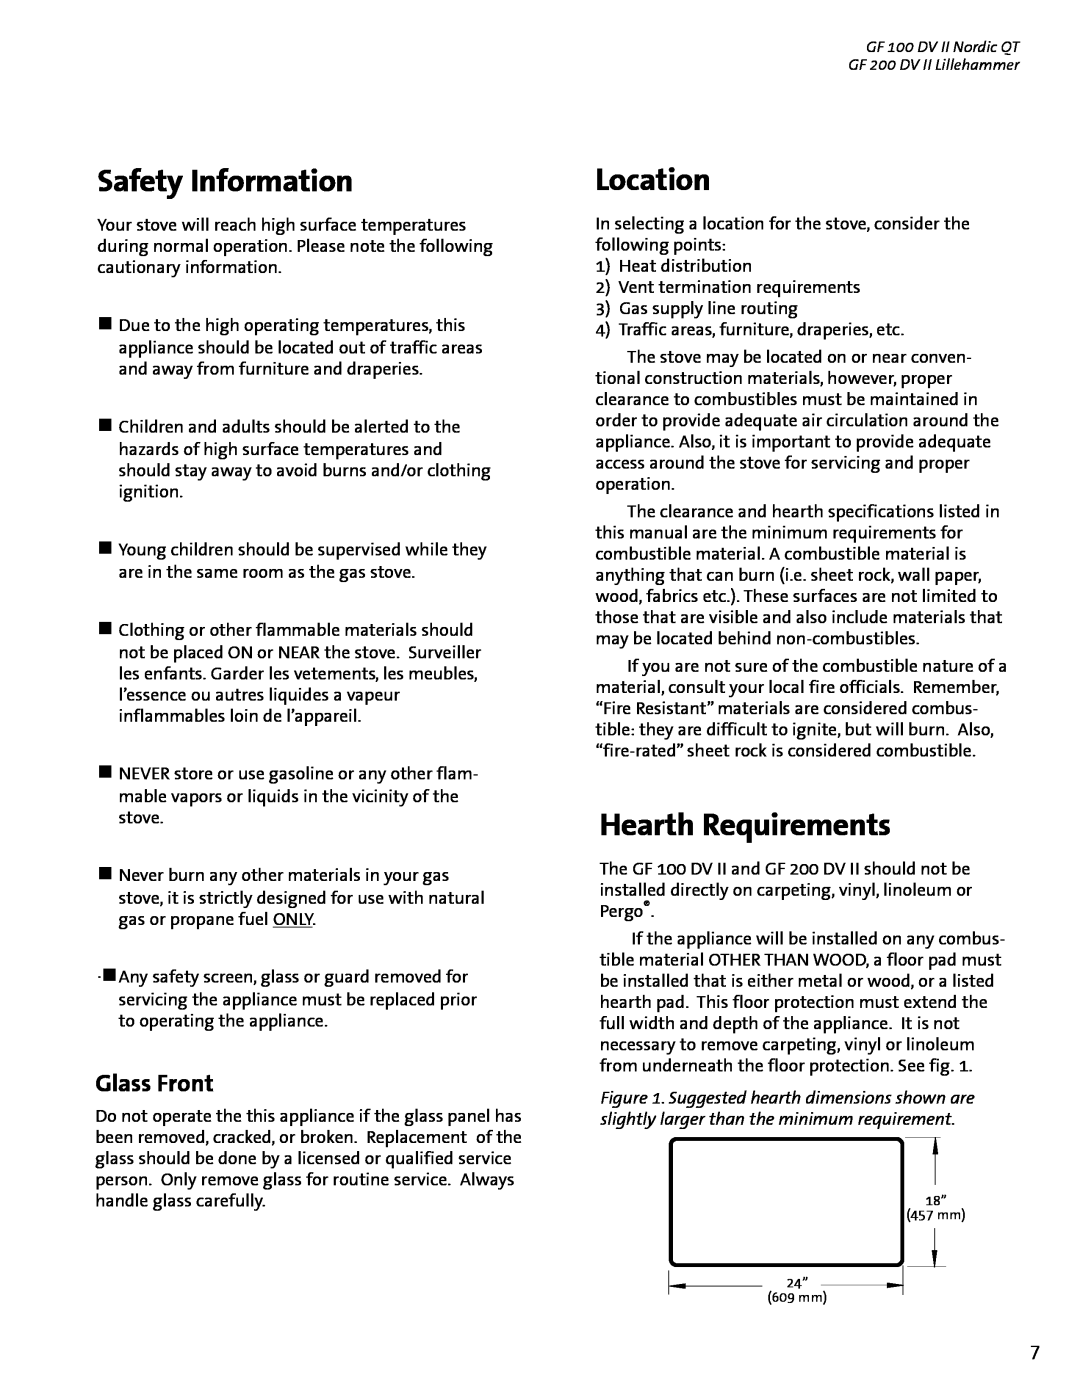 Jotul GF 100 DV II, GF 200 DV II manual Safety Information, Location, Hearth Requirements, Glass Front 